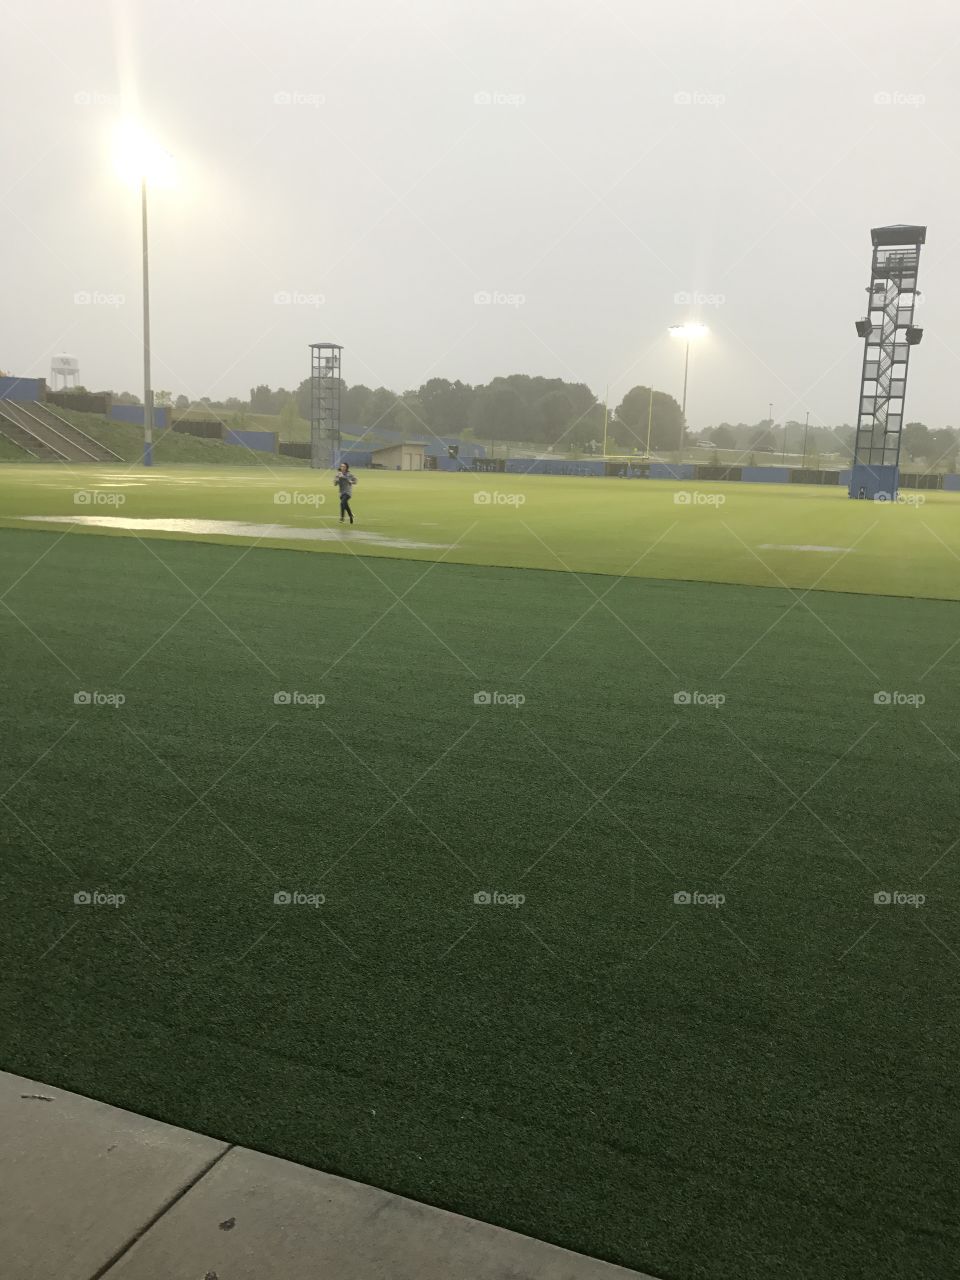 Football practice in the rain